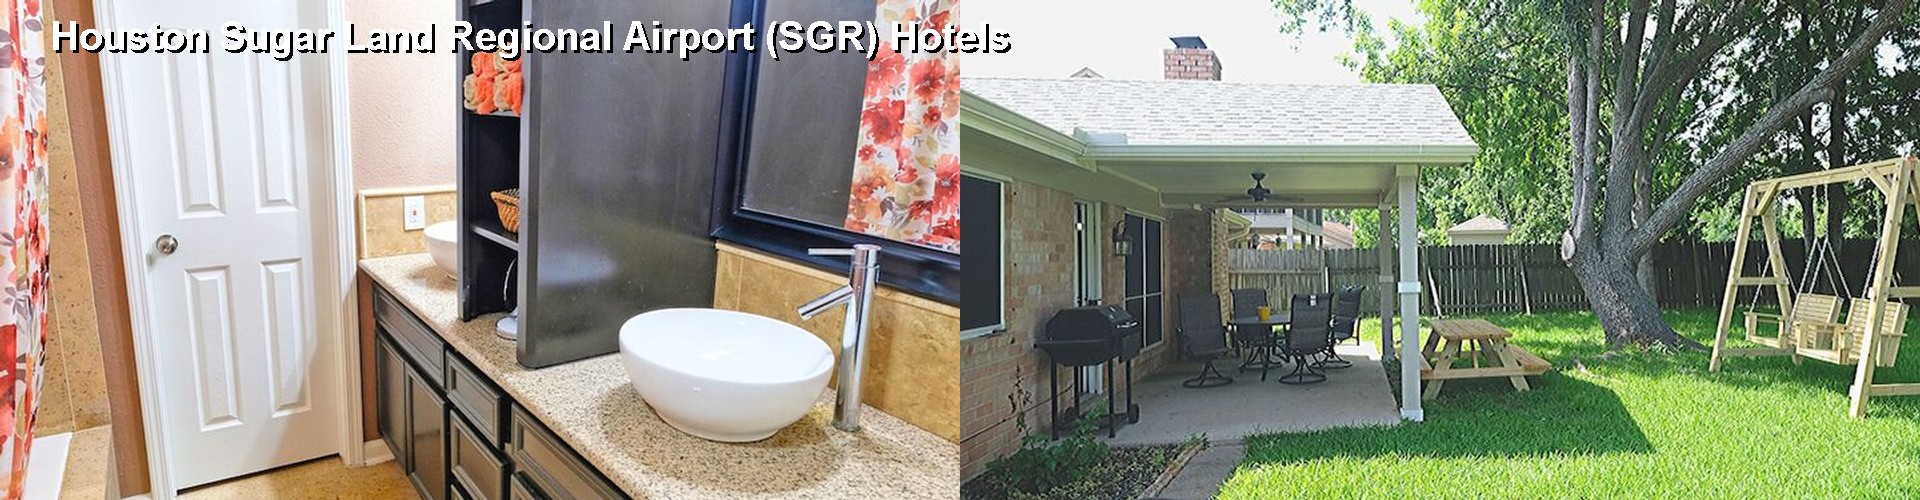 5 Best Hotels near Houston Sugar Land Regional Airport (SGR)